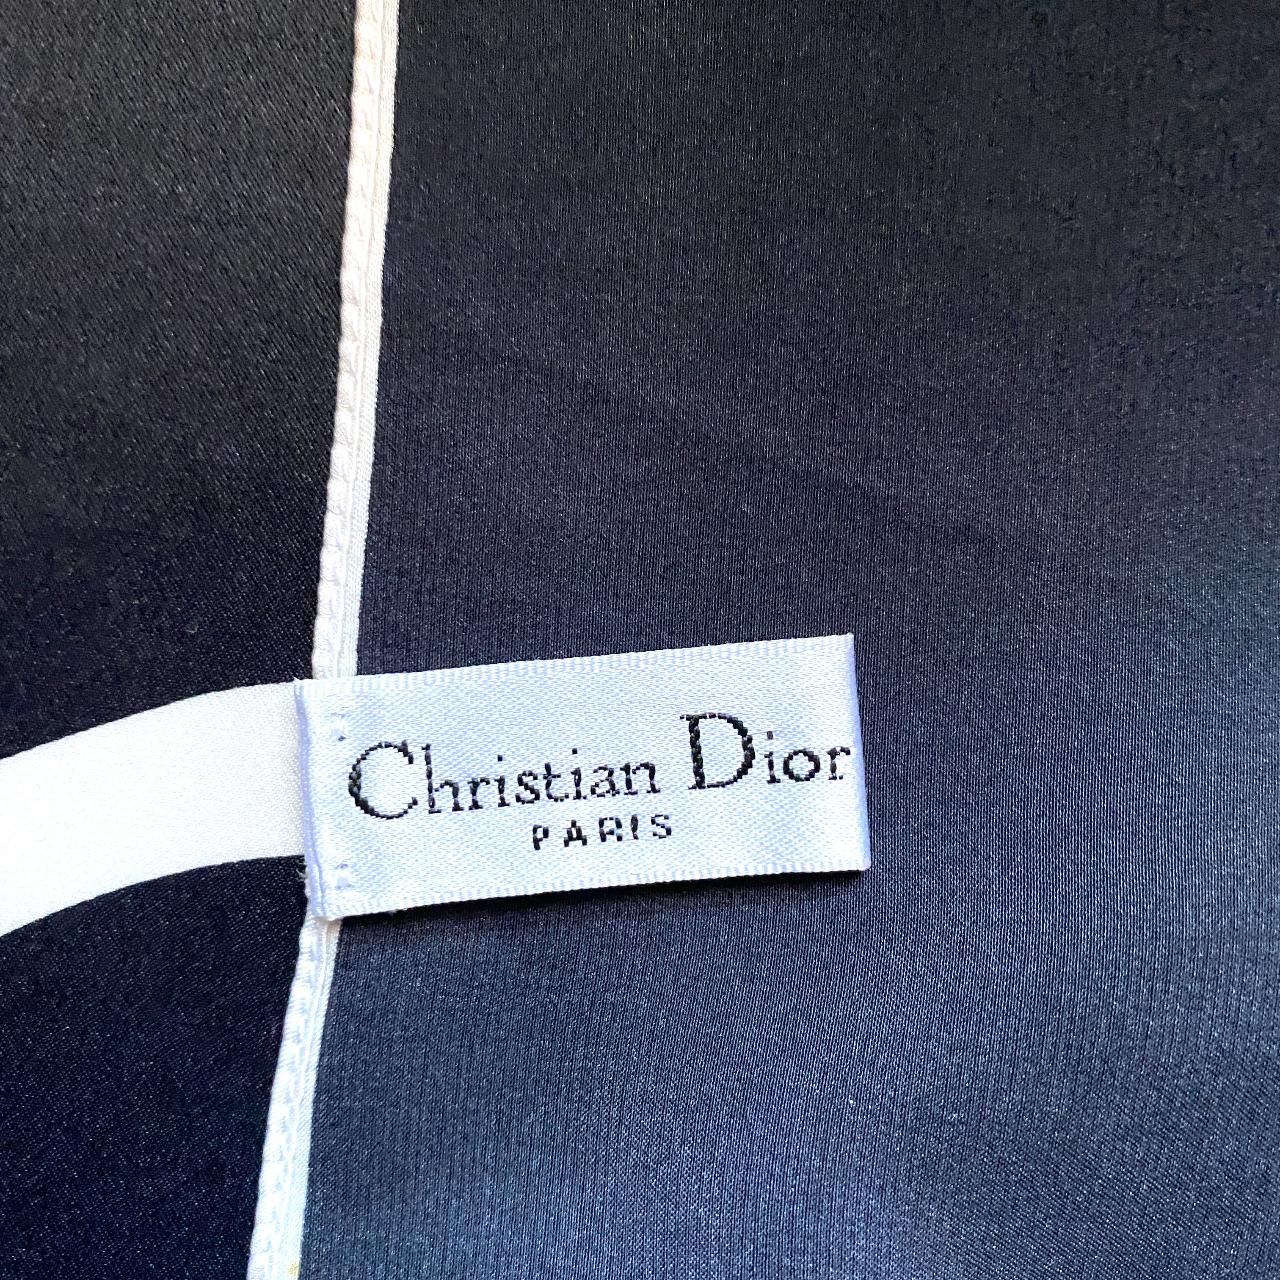 Dior Hair Scarf Next Day Free Shipping ✨ Super - Depop